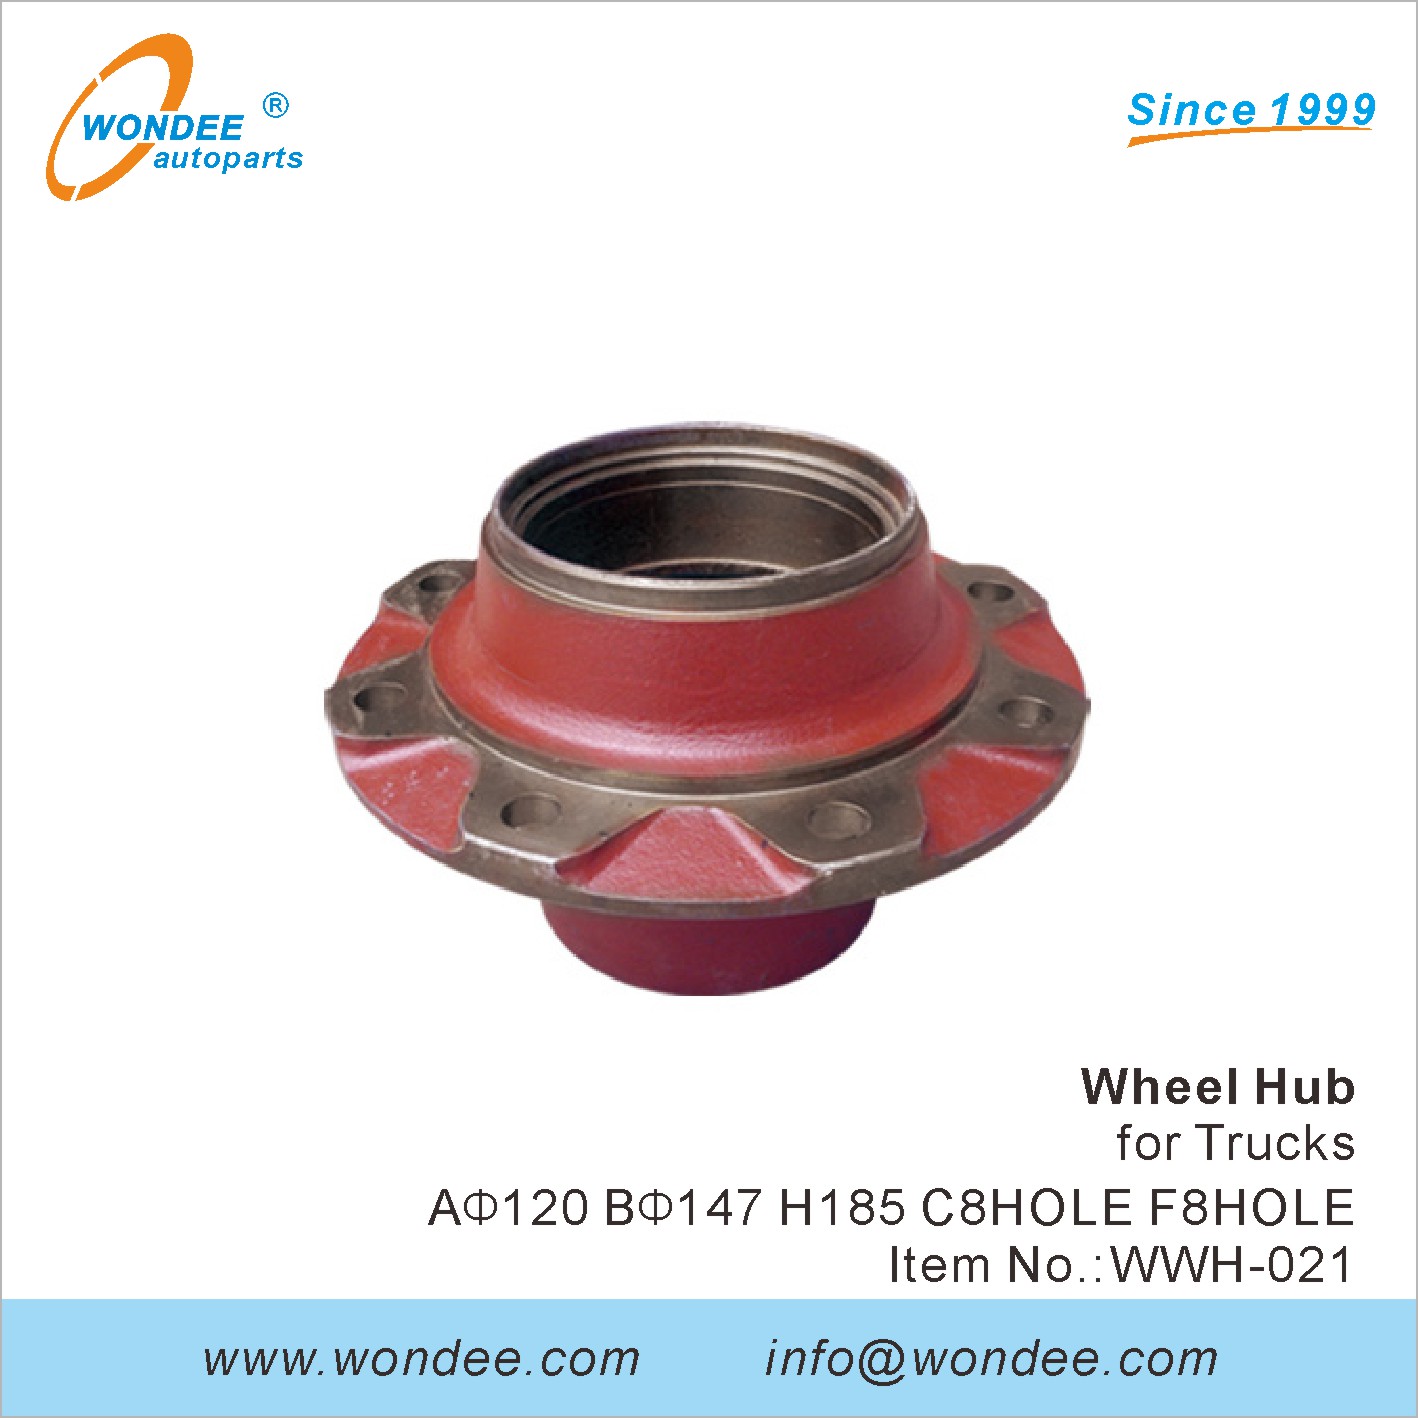 WONDEE wheel hub (21)